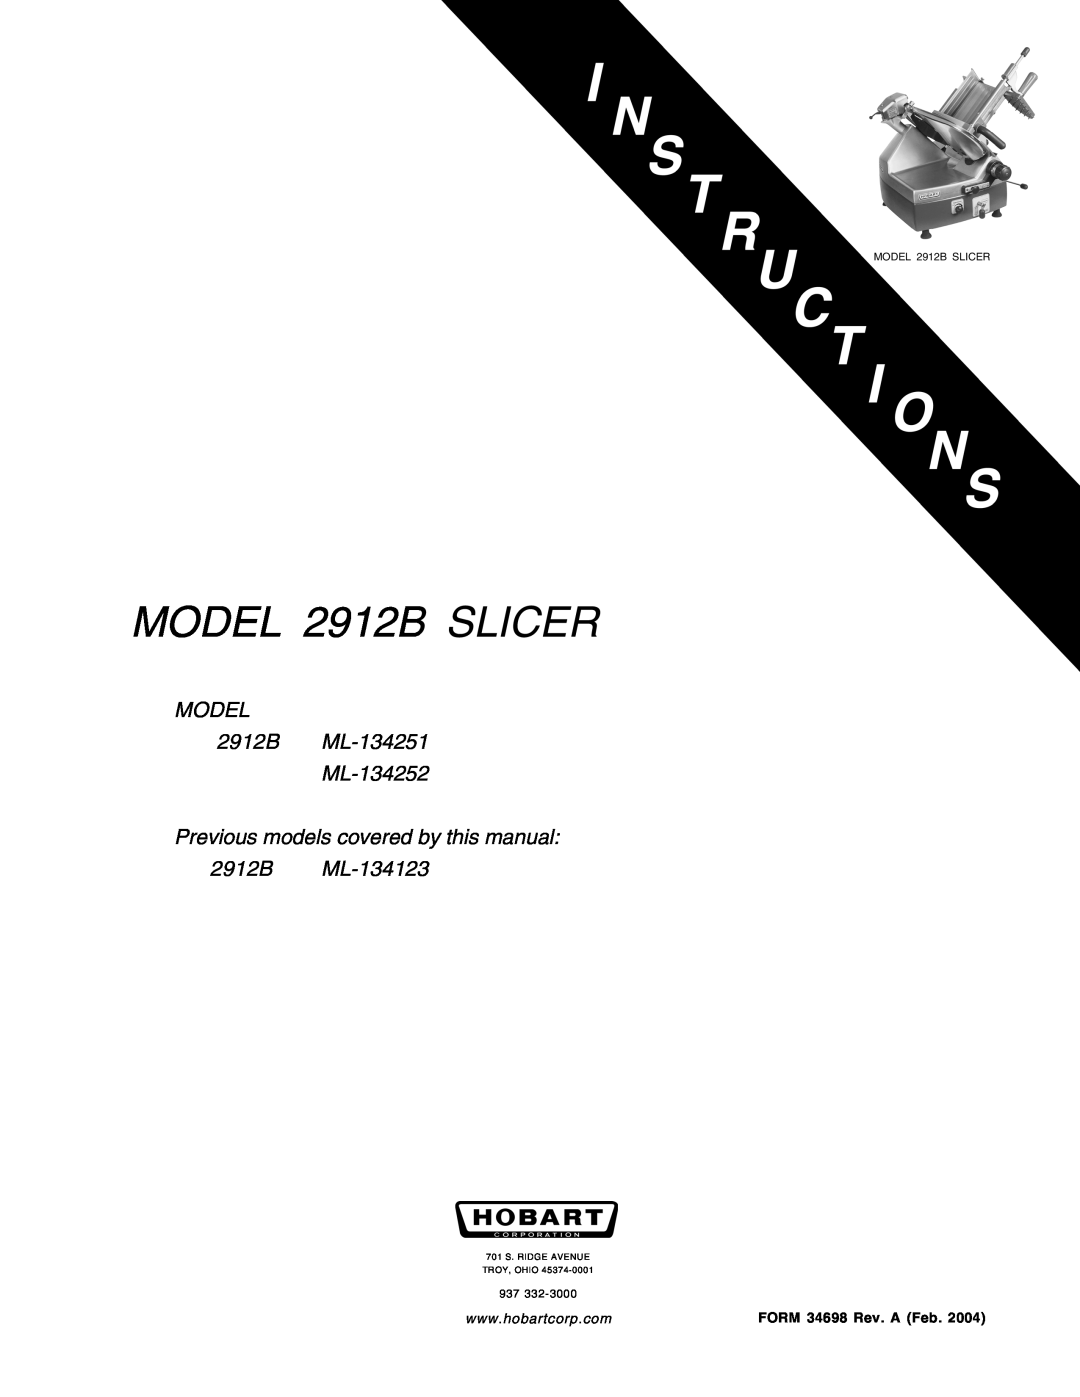 Hobart manual MODEL 2912B SLICER, MODEL 2912B ML-134251 ML-134252, Previous models covered by this manual 